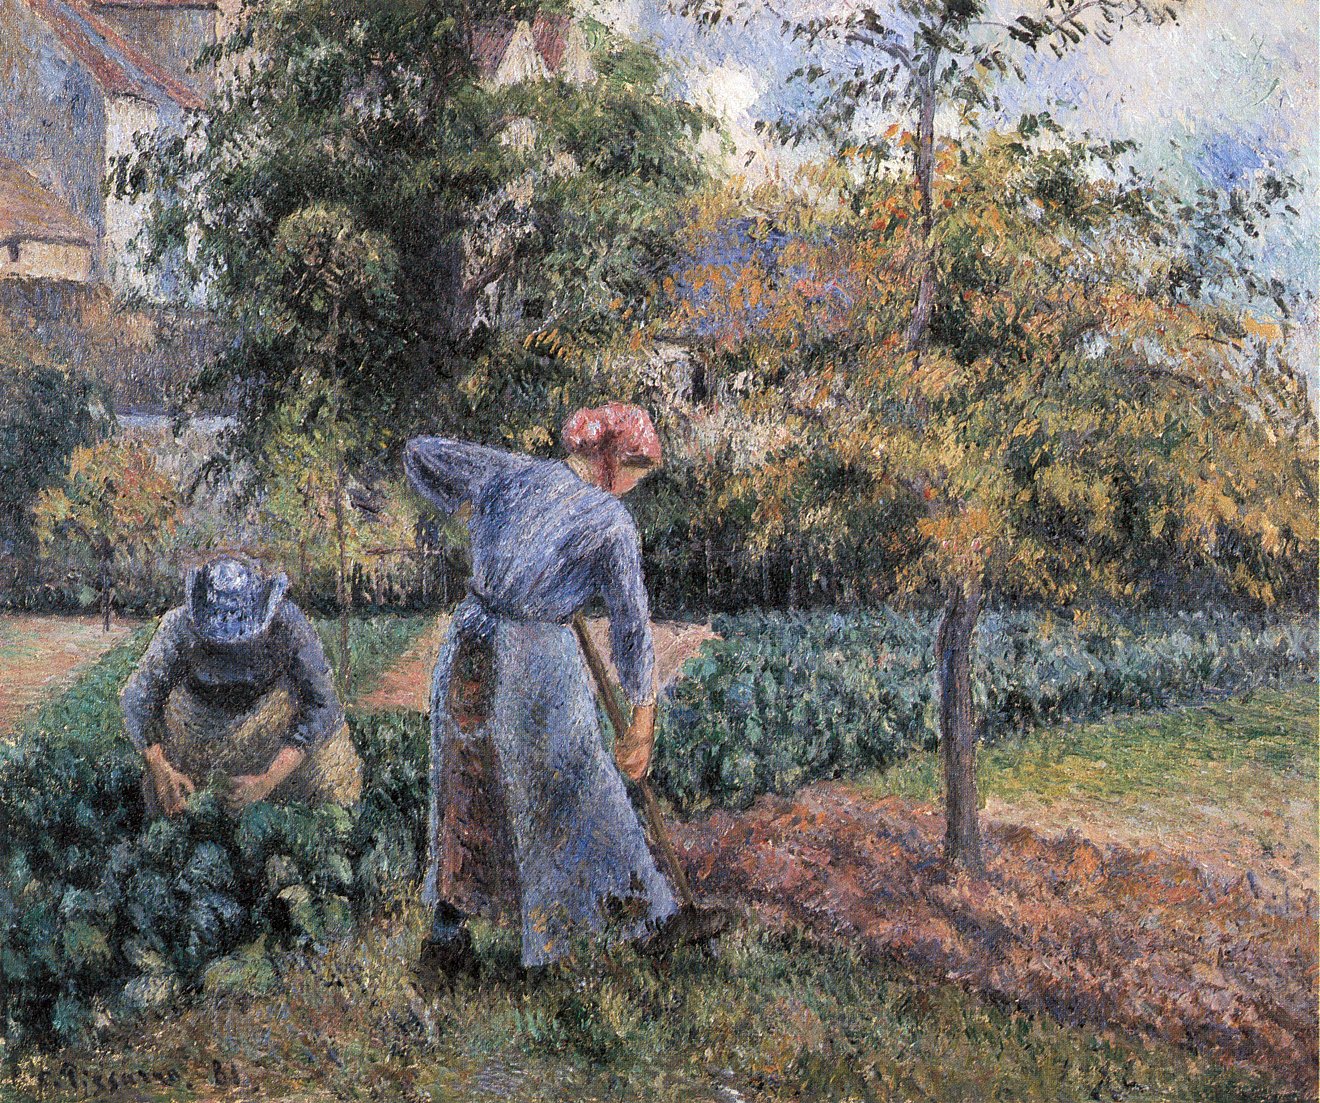 Camille+Pissarro-1830-1903 (326).jpg